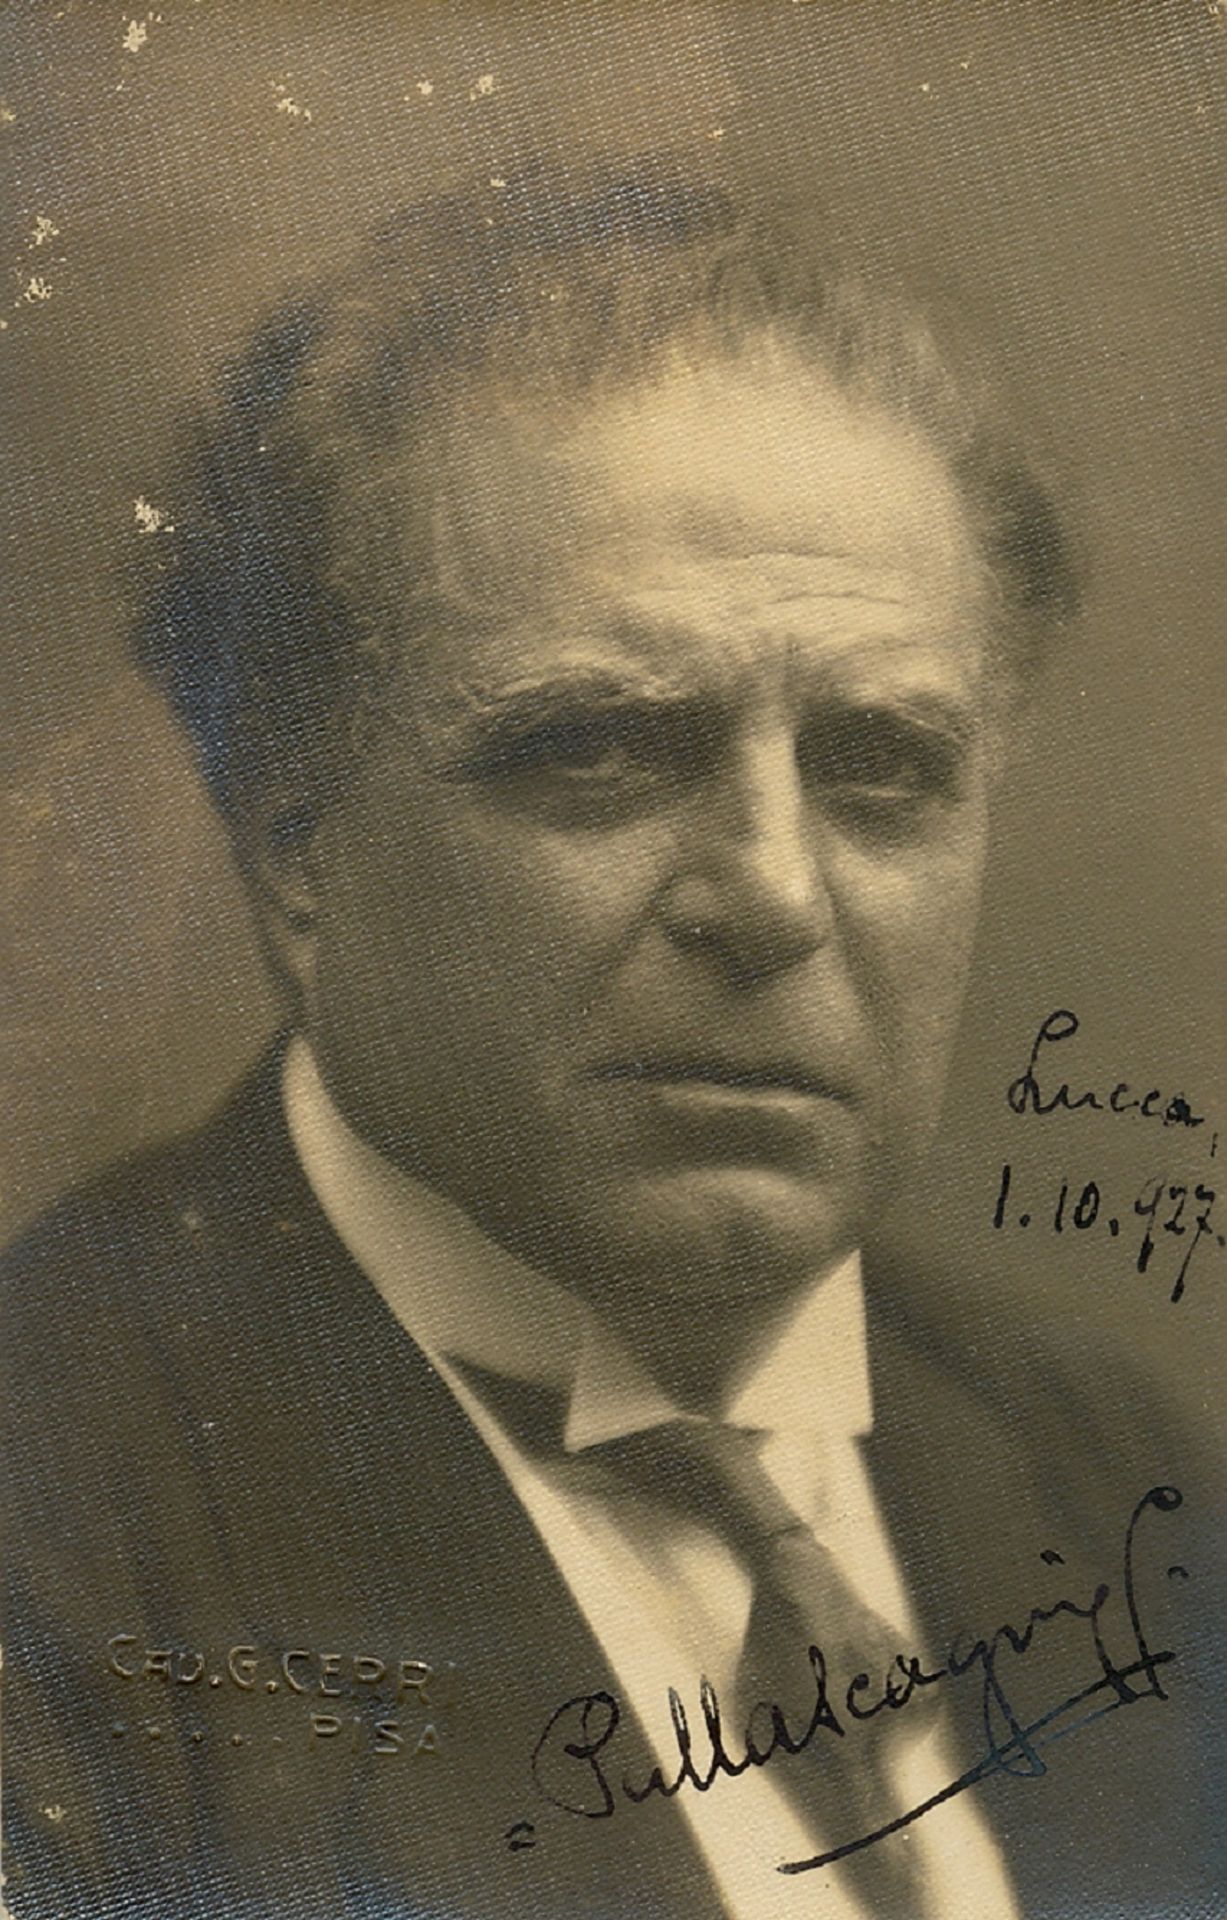 MASCAGNI PIETRO: (1863-1945) Italian Composer. Signed postcard photograph by Mascagni, the G.